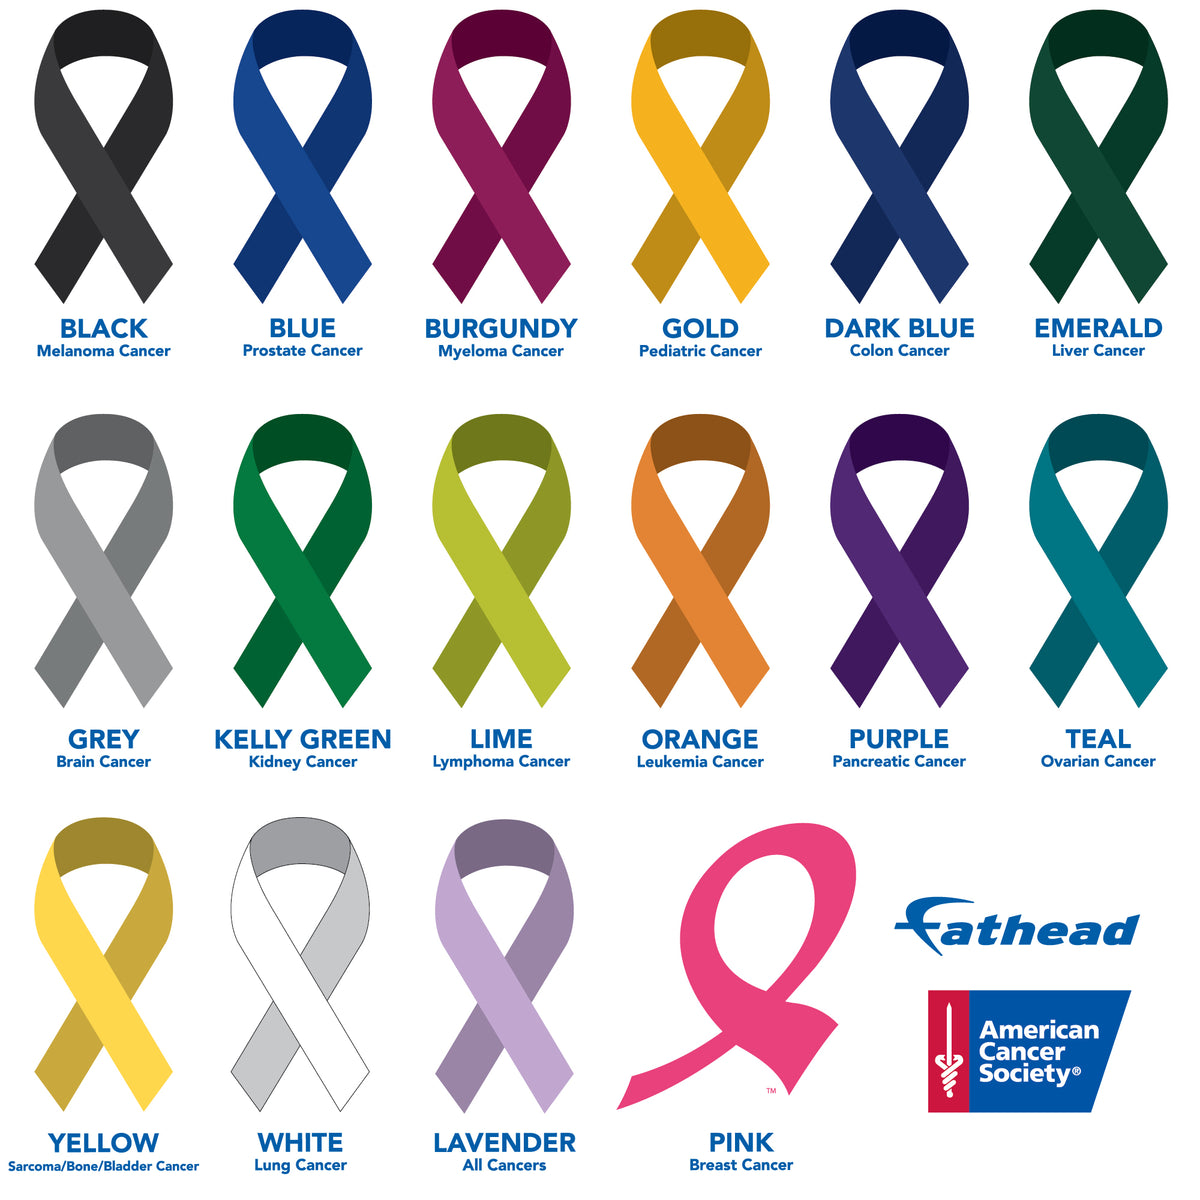 add-a-dark-blue-ribbon-for-colon-cancer-awareness-to-tb-john-bain-914-1322-r-place